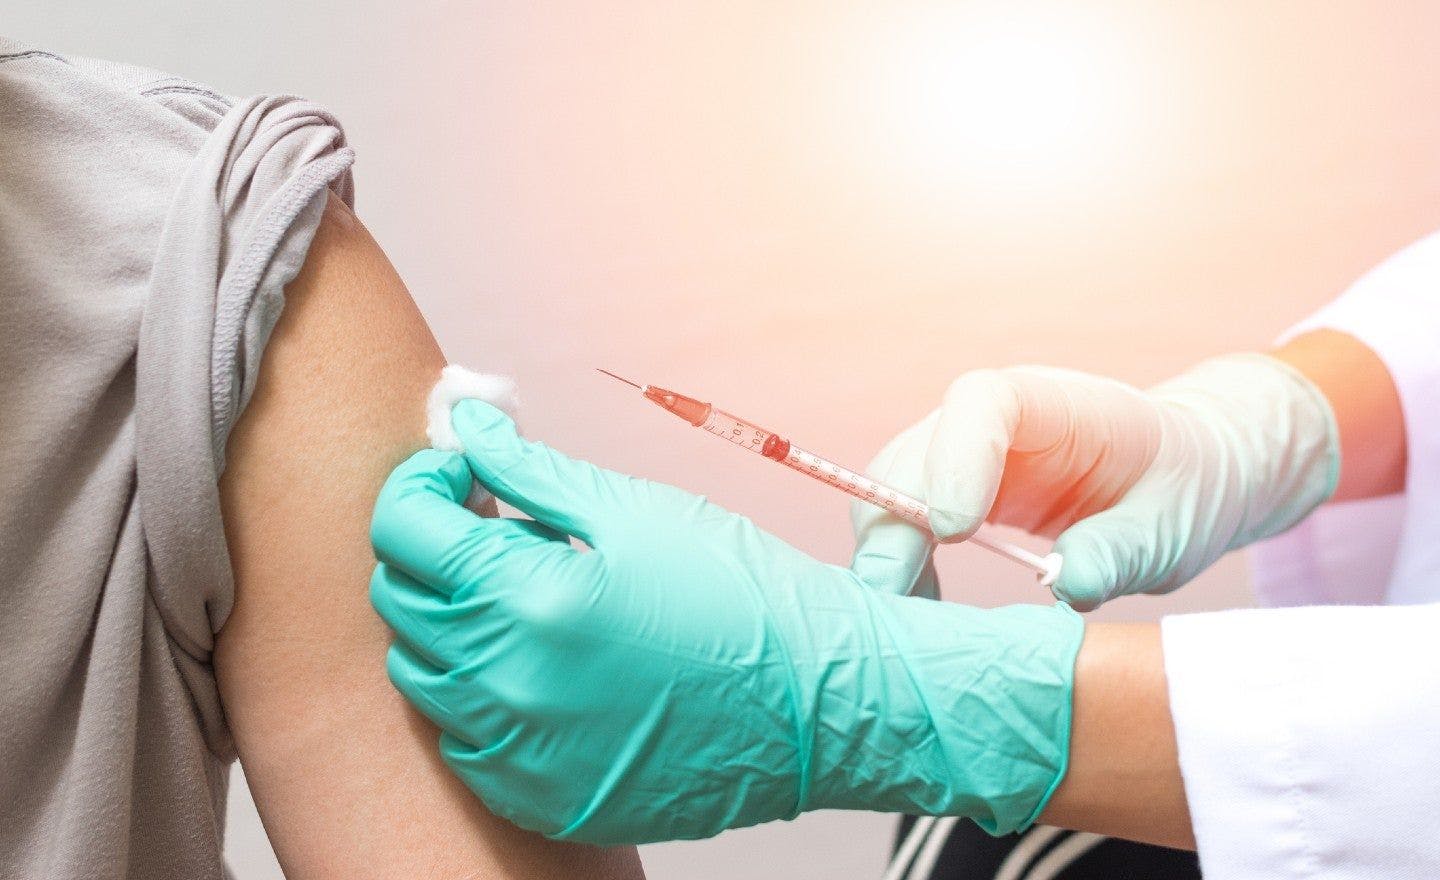 Specific Initiatives To Help Mitigate Vaccine Hesitancy